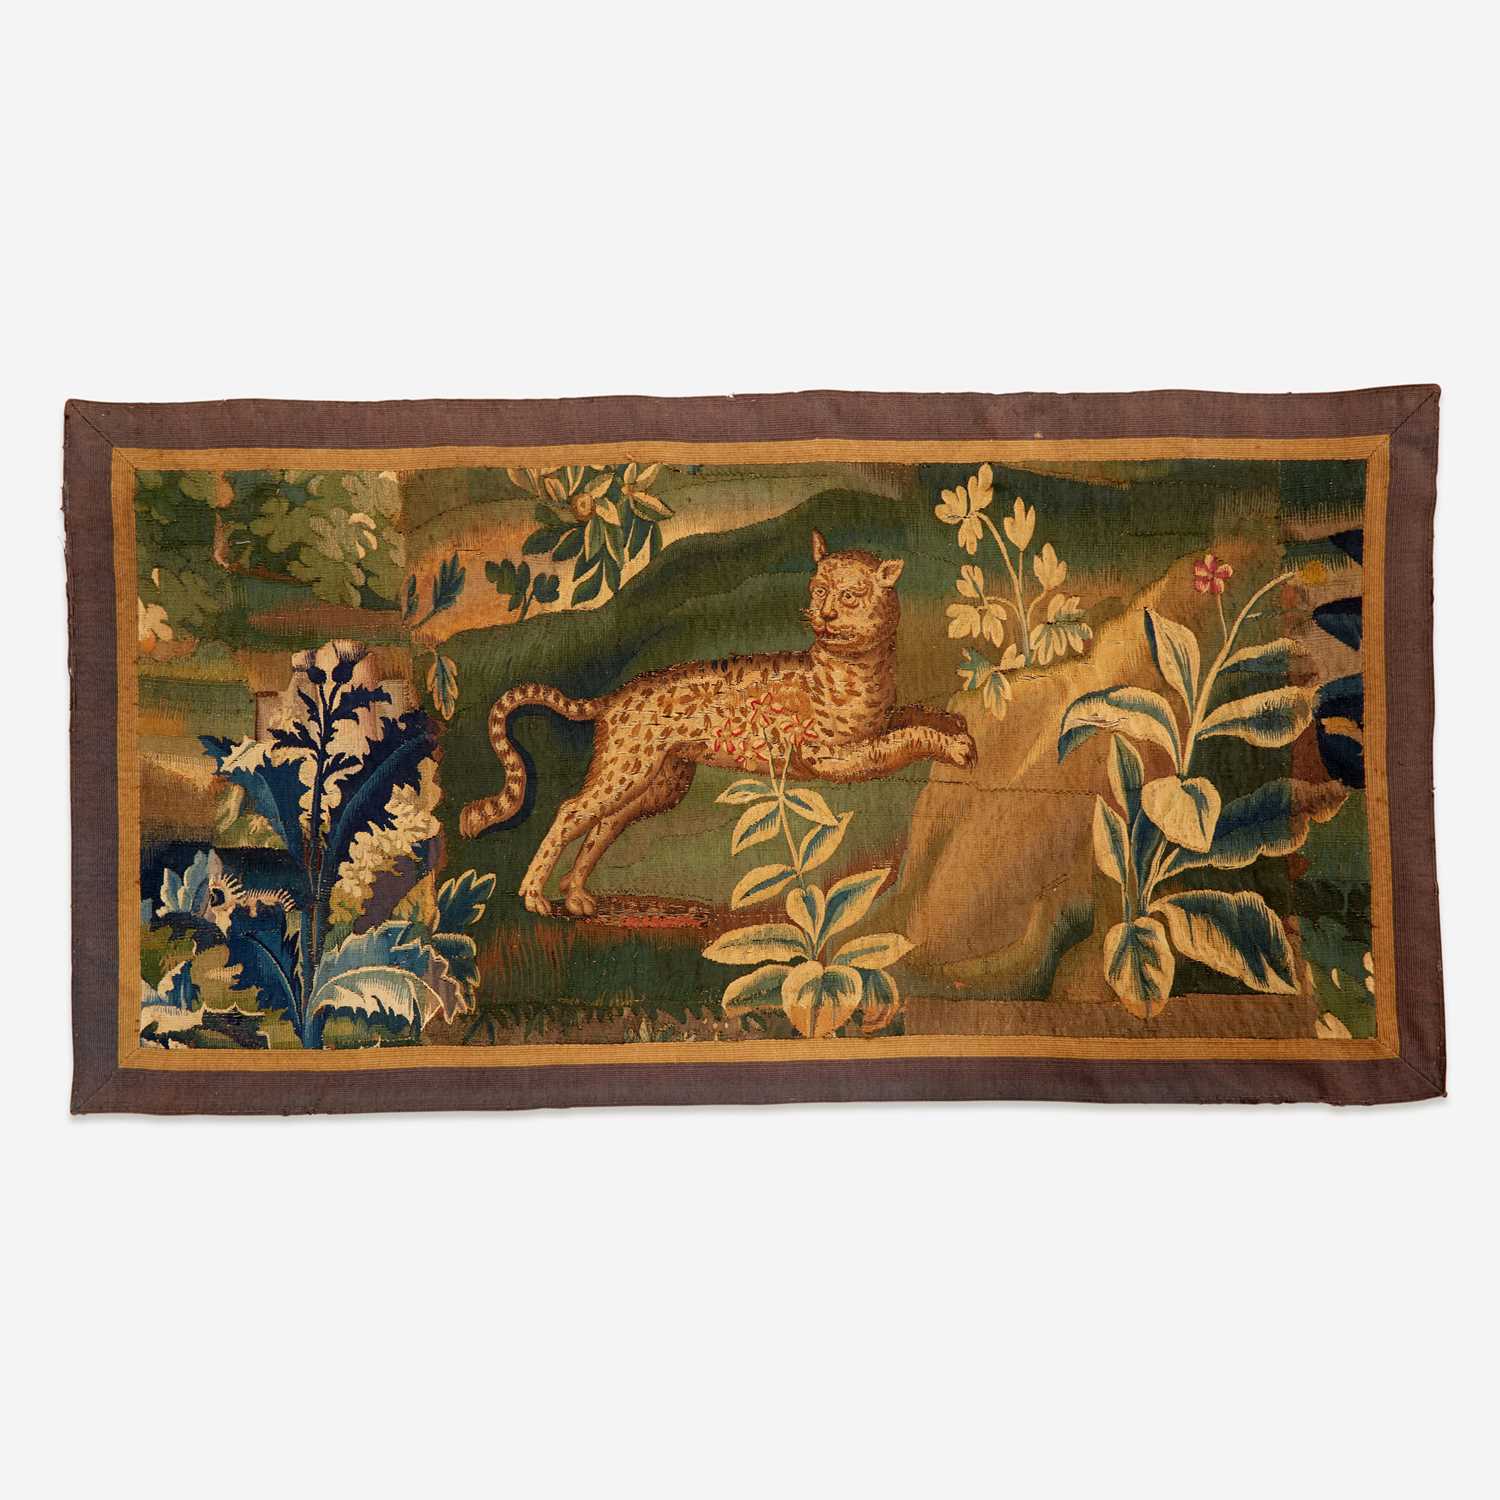 Lot 14 - A Flemish Verdure Tapestry Fragment